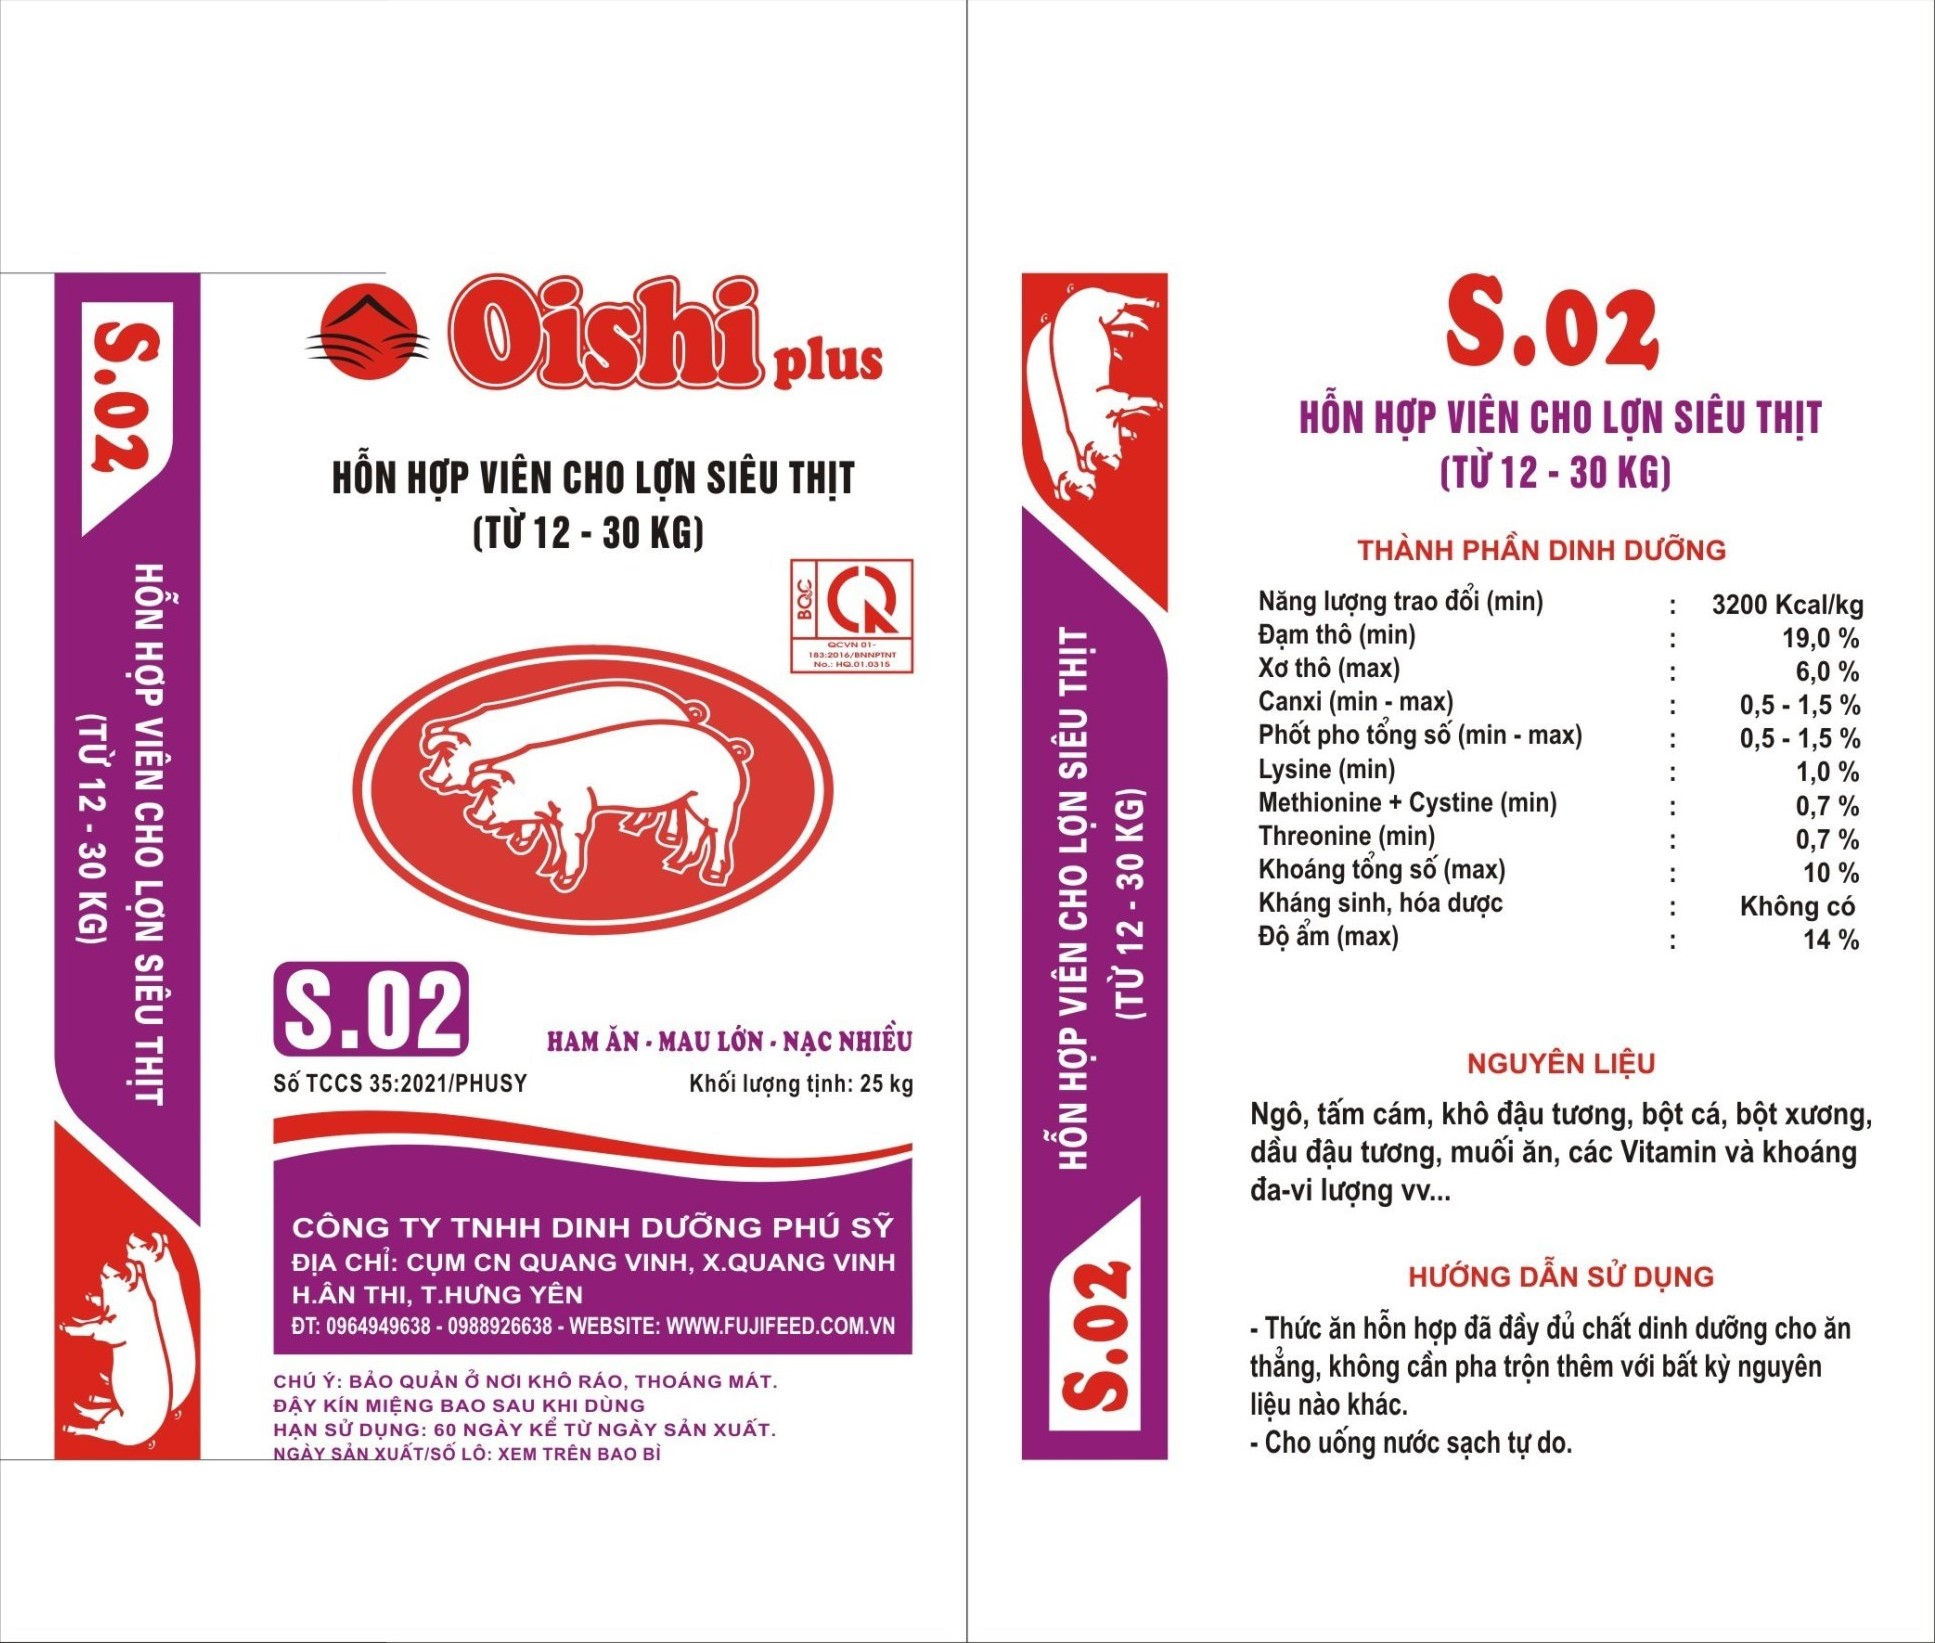 Oishi plus-S.02